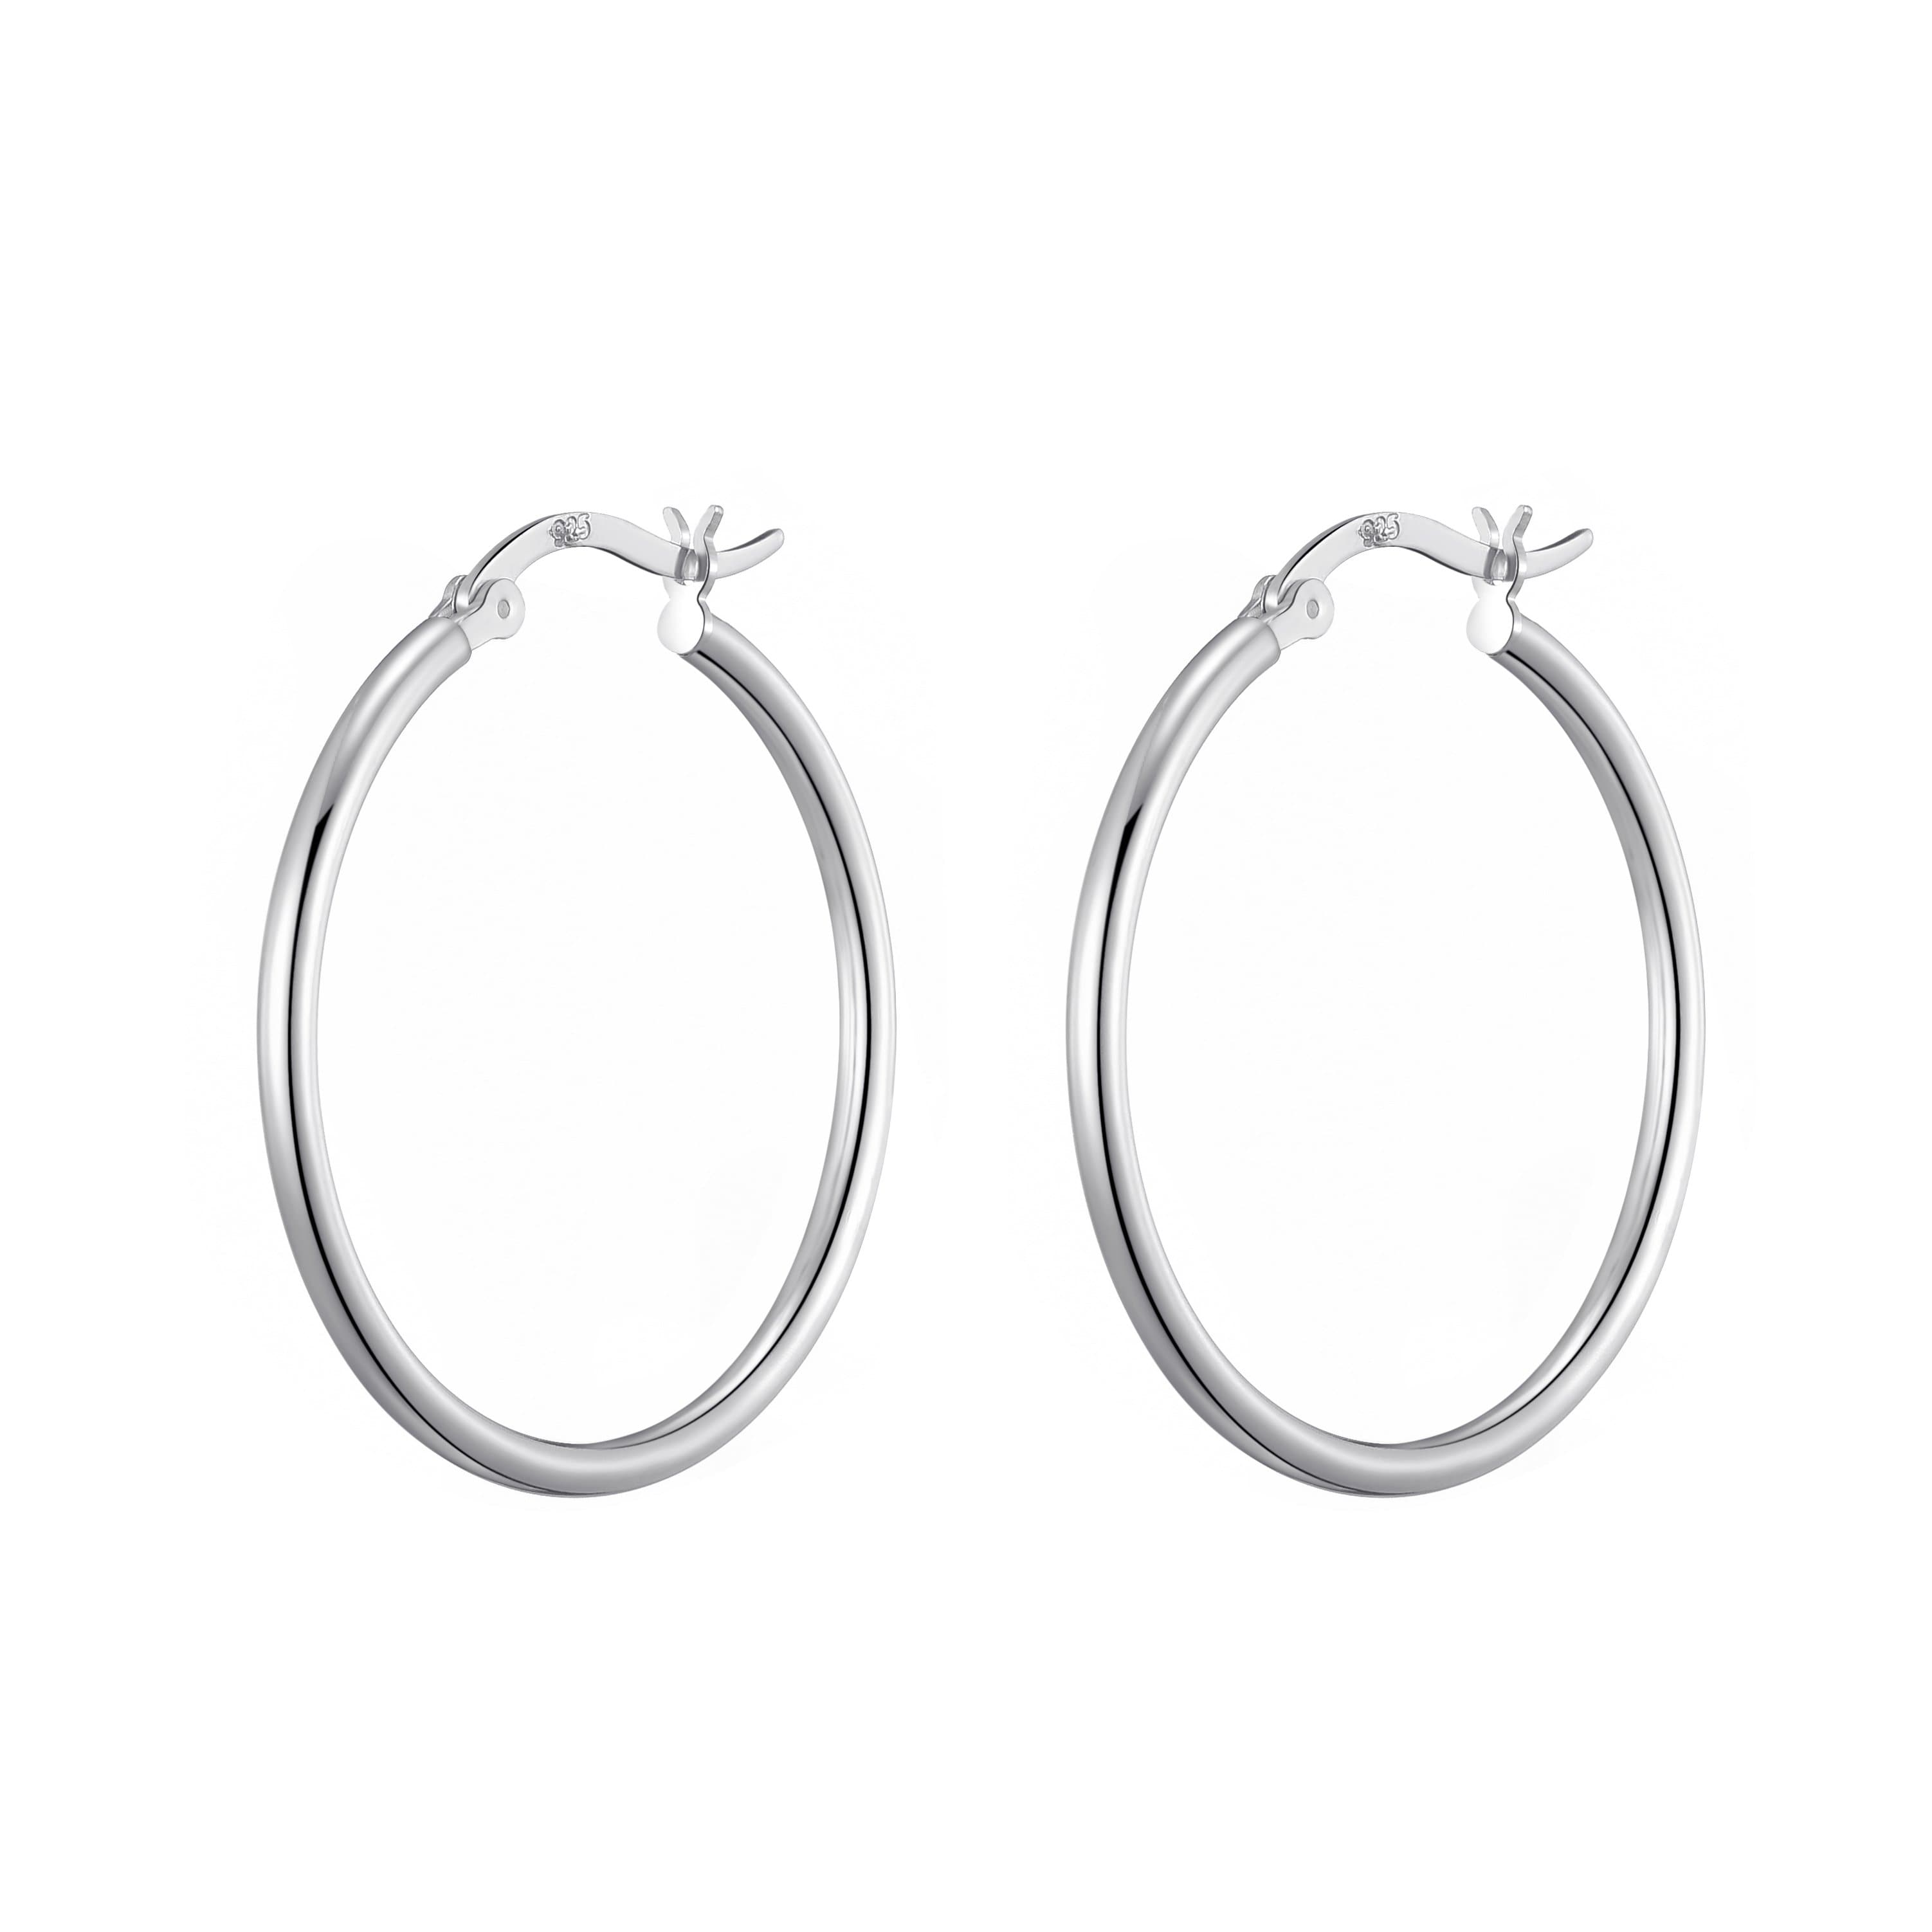 Sterling Silver 30mm Hoop Earrings by Philip Jones Jewellery